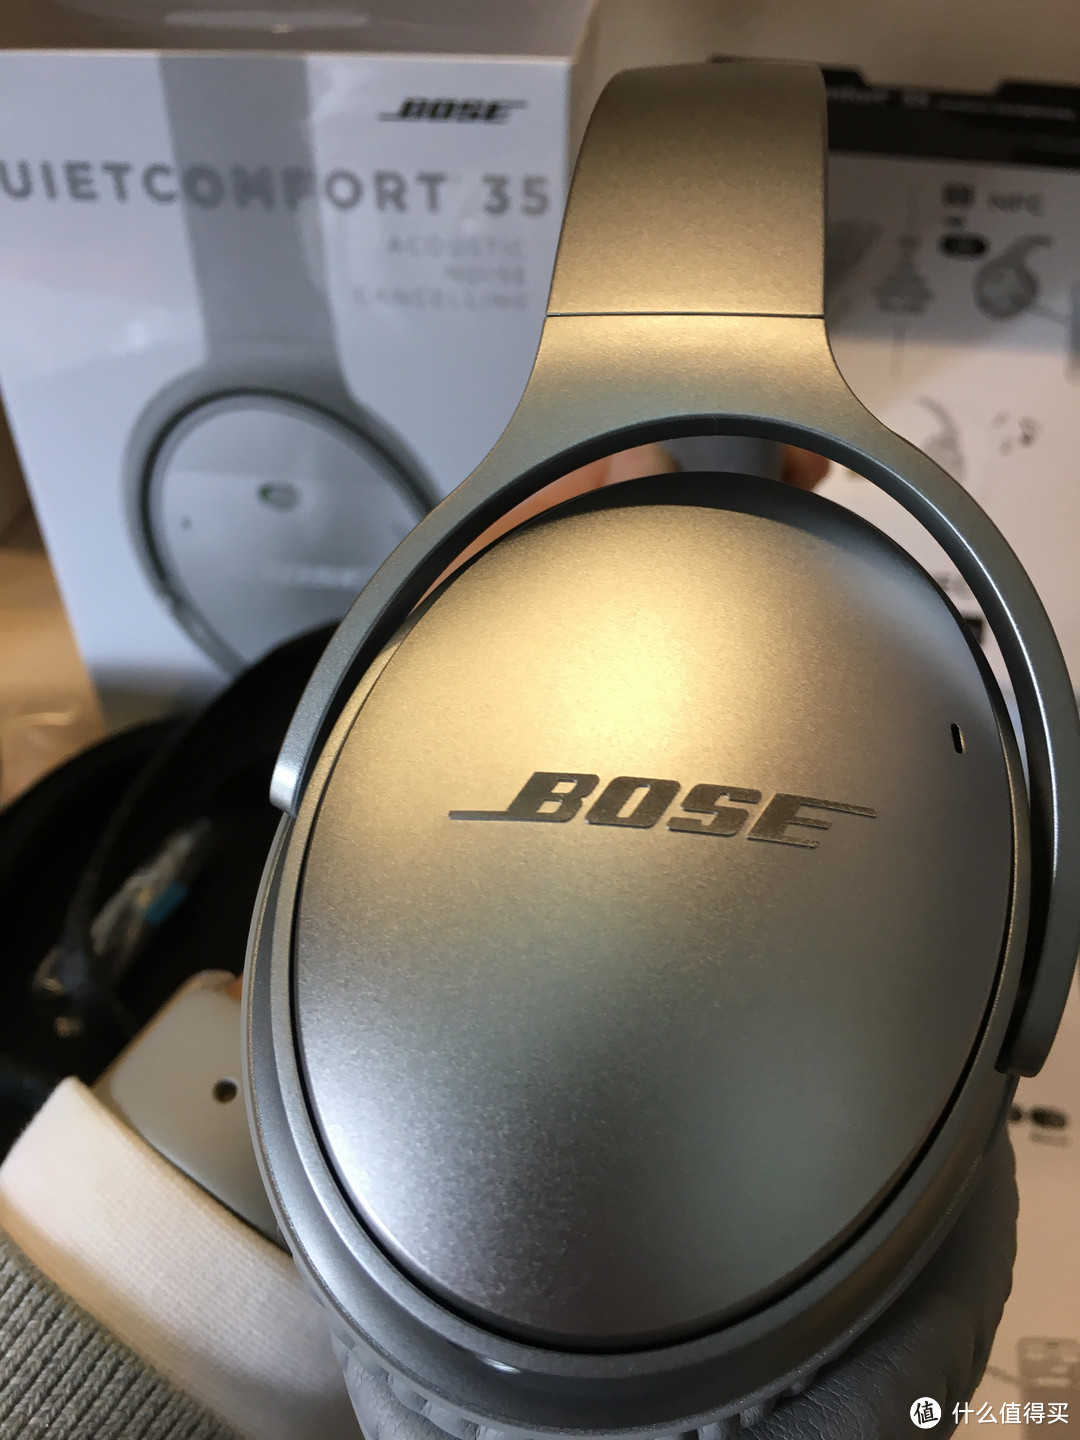 主动降噪耳机大汇总 — Sony1000X  BoseQC35  B&O H9  BoseQC20  BoseQC30  Libratone Q Adapt  对比&评测